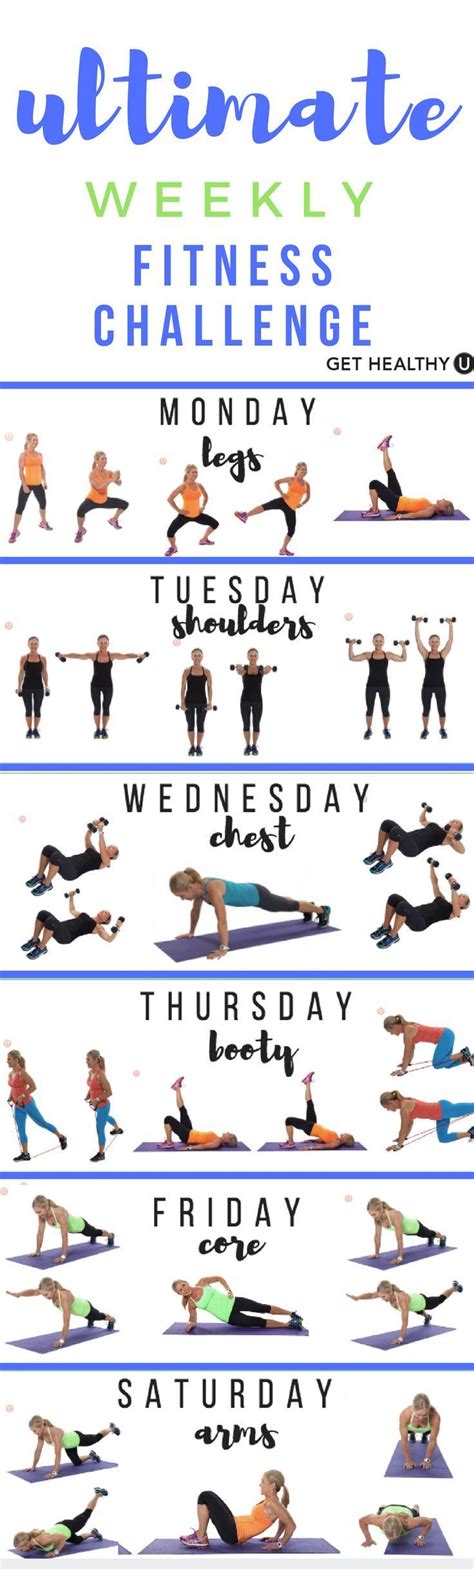 Ultimate Weekly Fitness Challenge Get Healthy U Workout Challenge